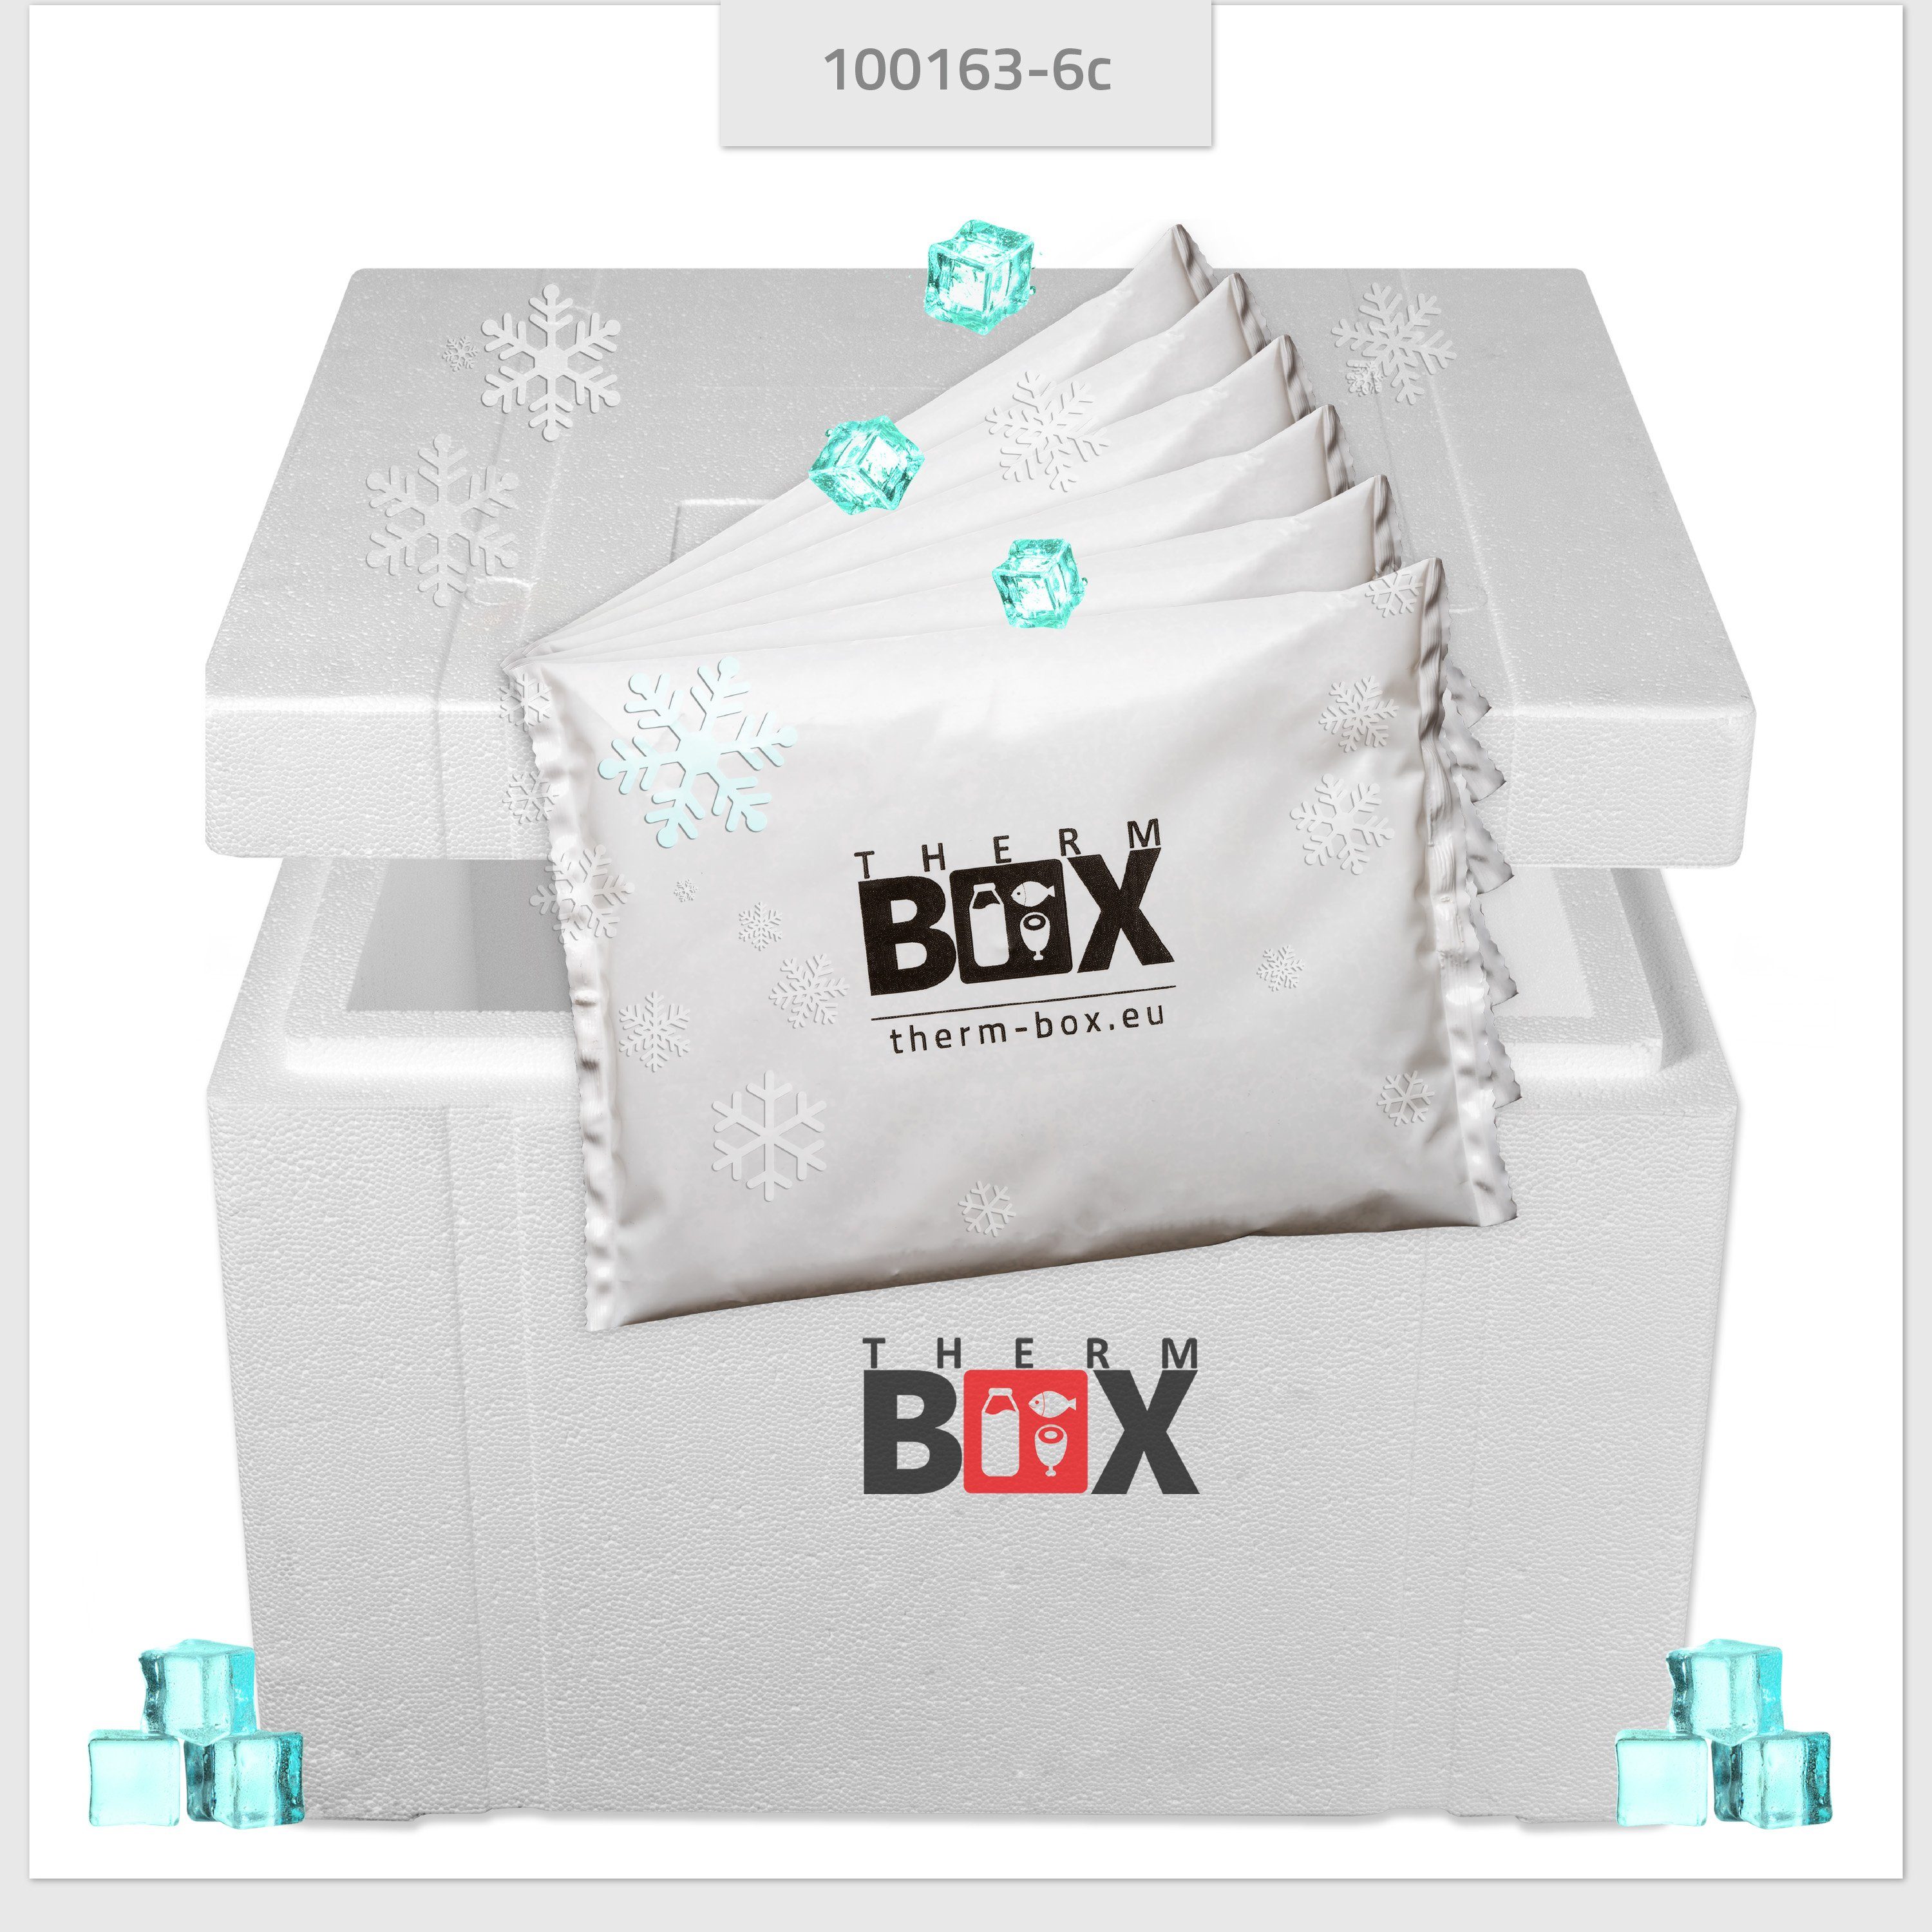 Kühlbox 53,24L Styroporbox Thermobehälter Transportbox 53W (0-tlg., Kühlkissen, Thermbehälter Kühlkissen), Kühlakku Styropor-Verdichtet, 47x38x29cm mit THERM-BOX 6 Innen: mit Thermbox